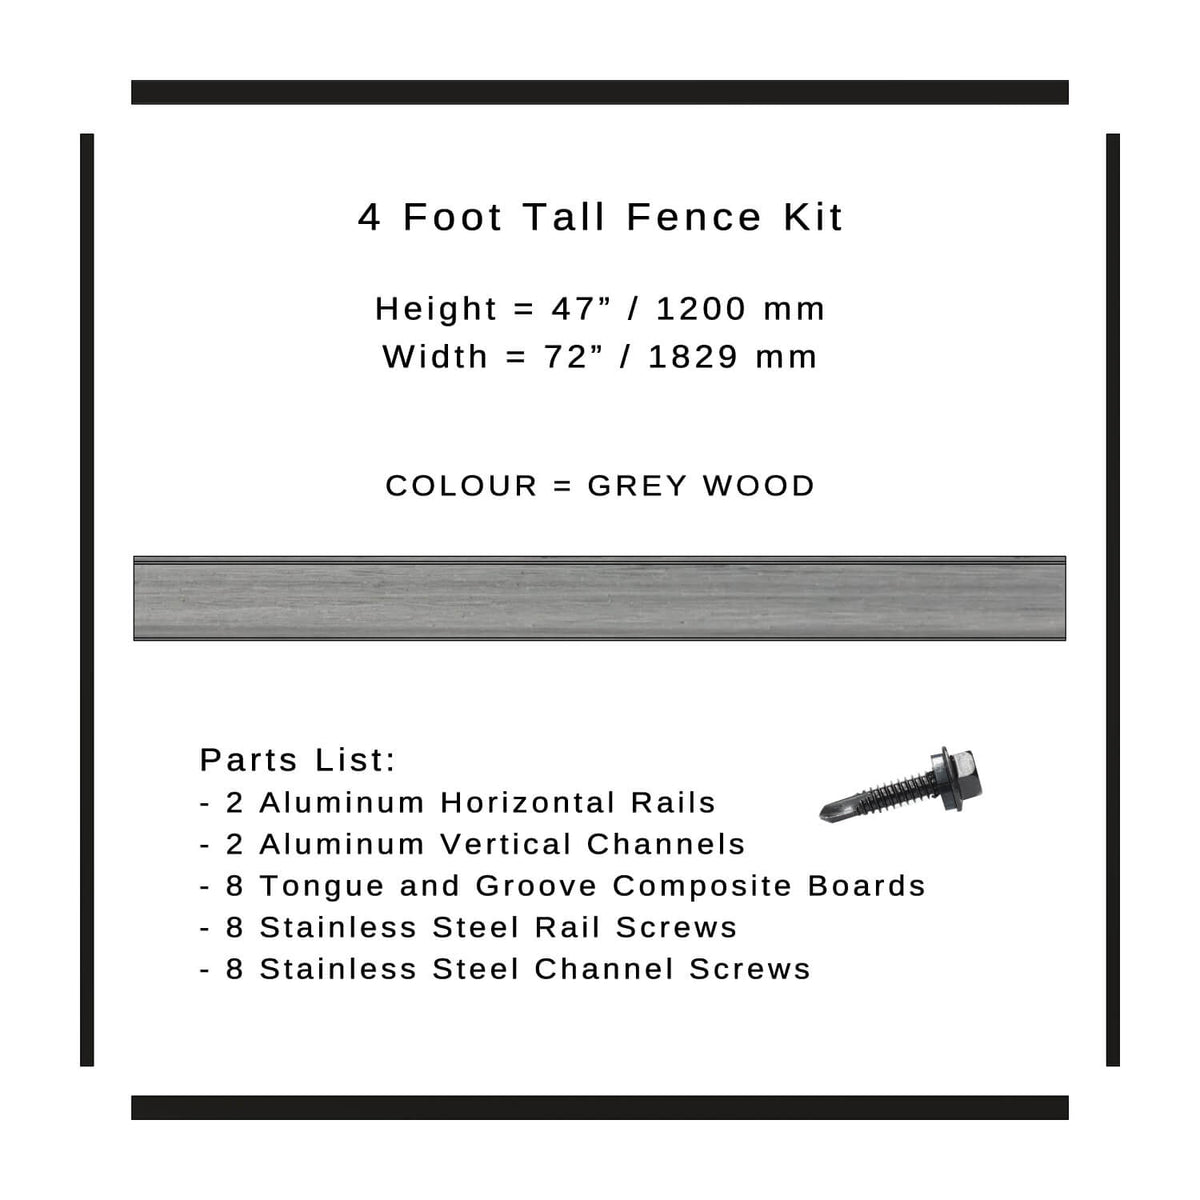 4 foot tall modular fence kit in grey wood